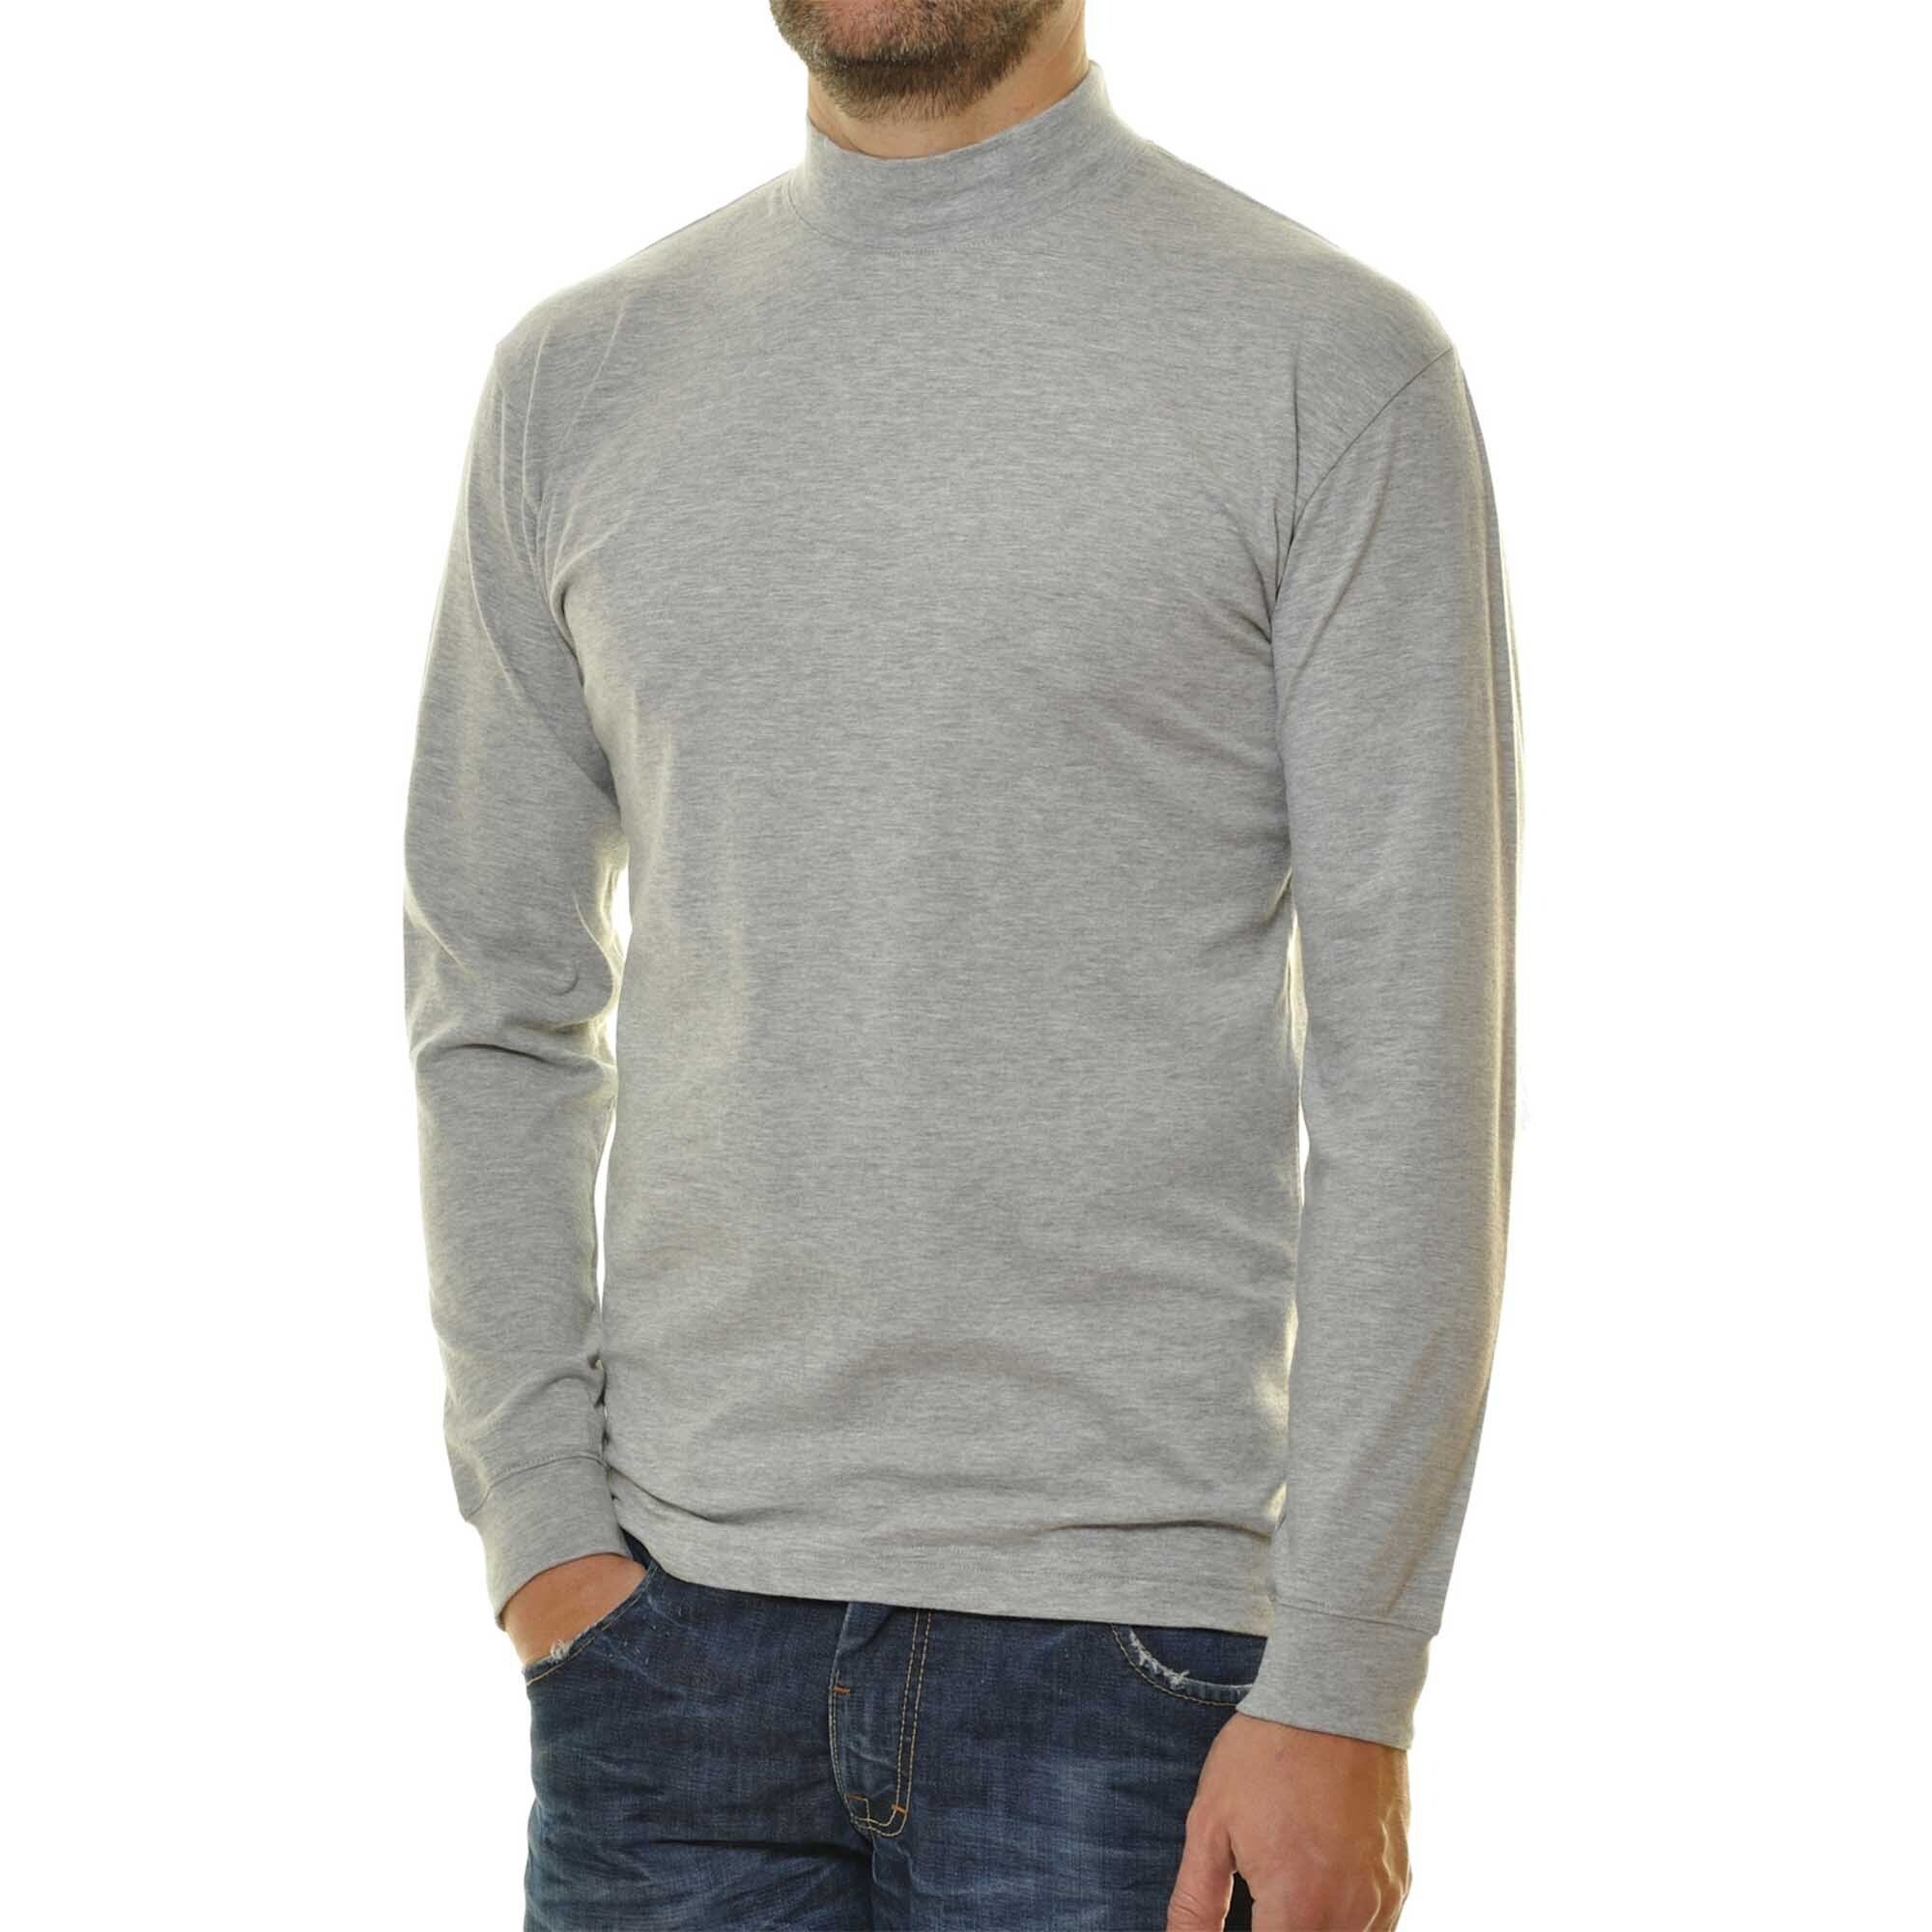 Stehkragen-Pullover - Grau Basic Herren Langarm RAGMAN Melange Sweatshirt